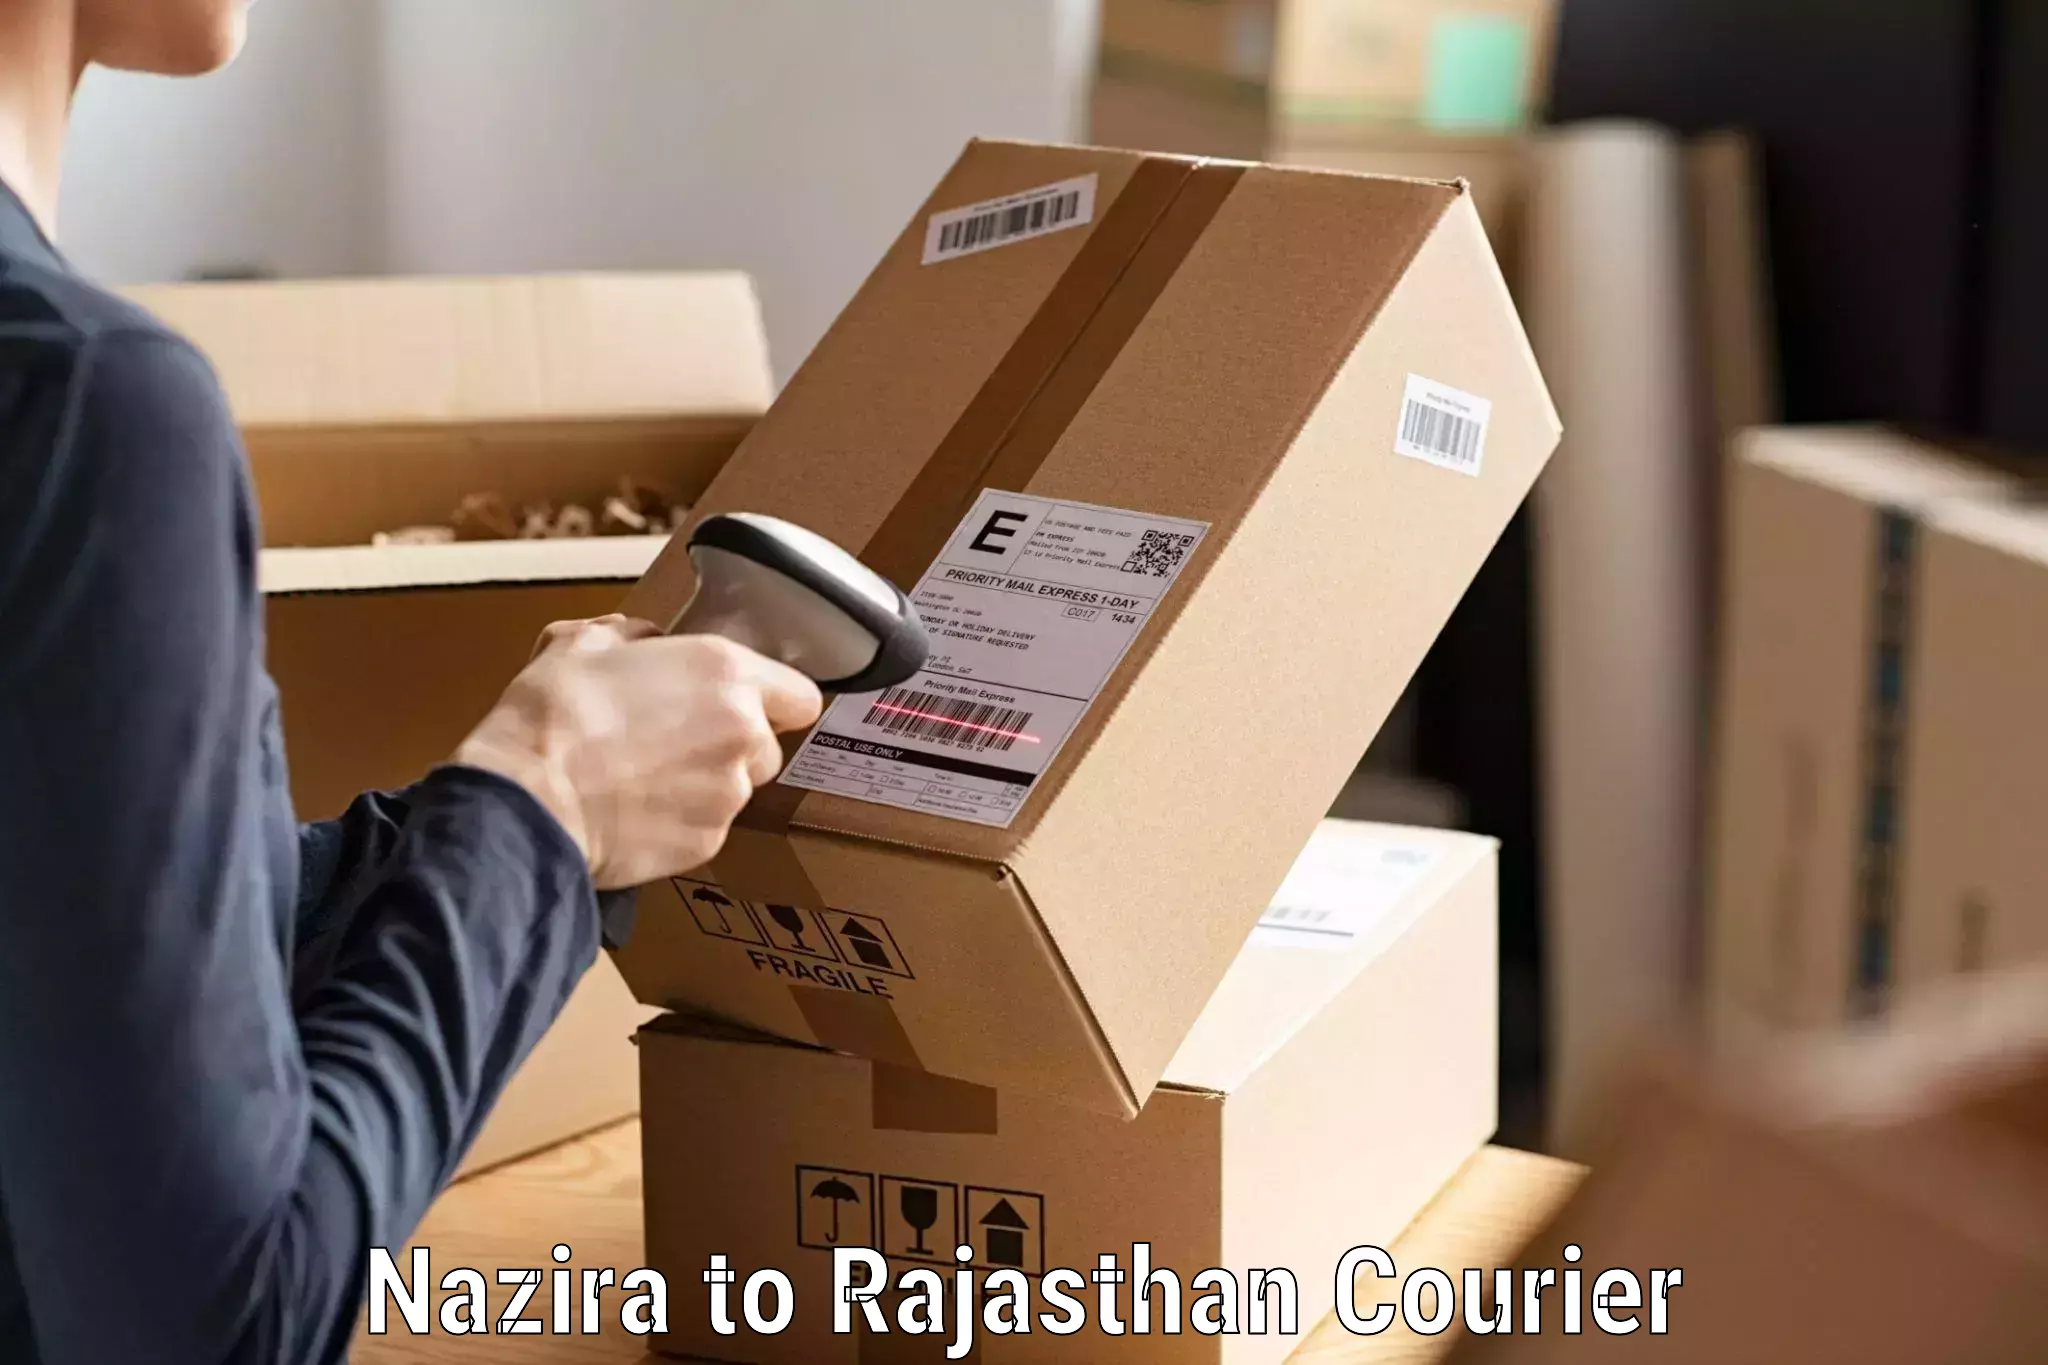 Reliable parcel services Nazira to Pokhran